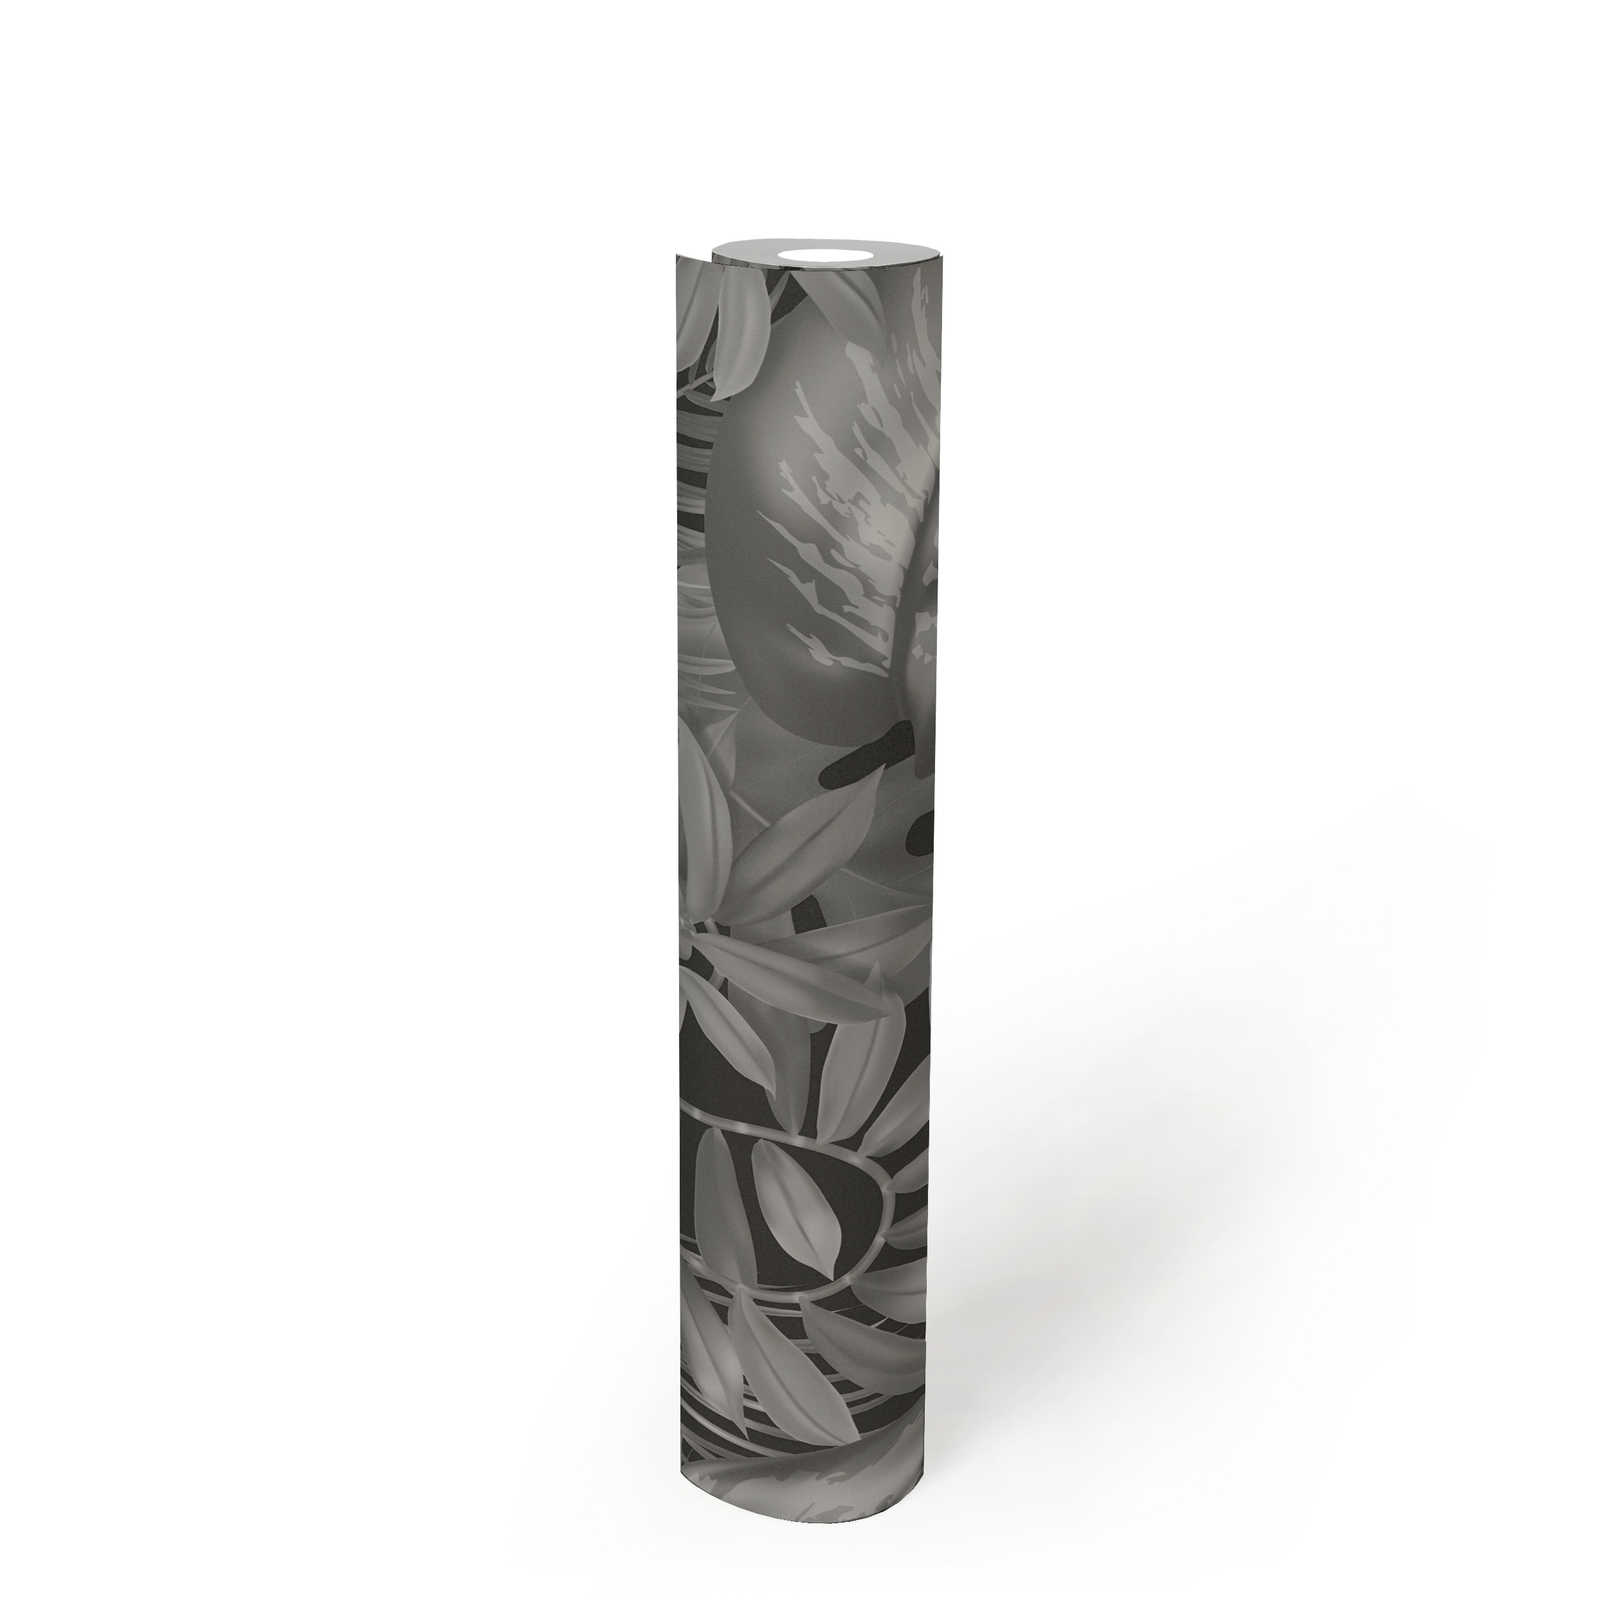             Papel pintado Leaves jungle pattern - gris, negro
        